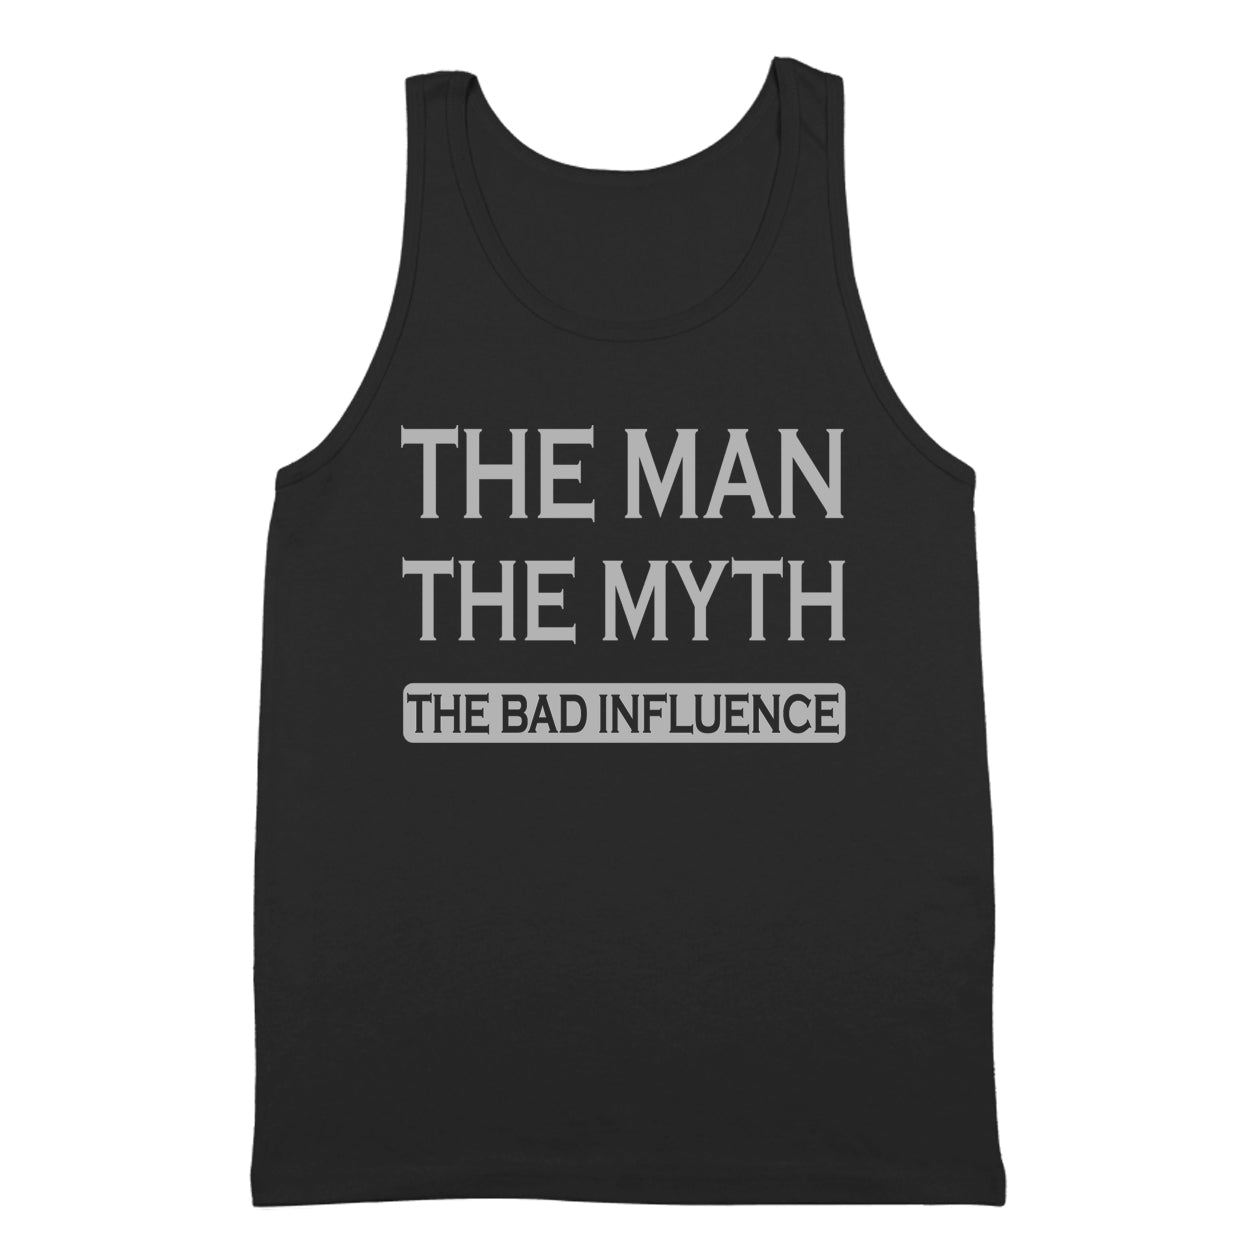 The Man The Myth Bad Influence Tshirt - Donkey Tees